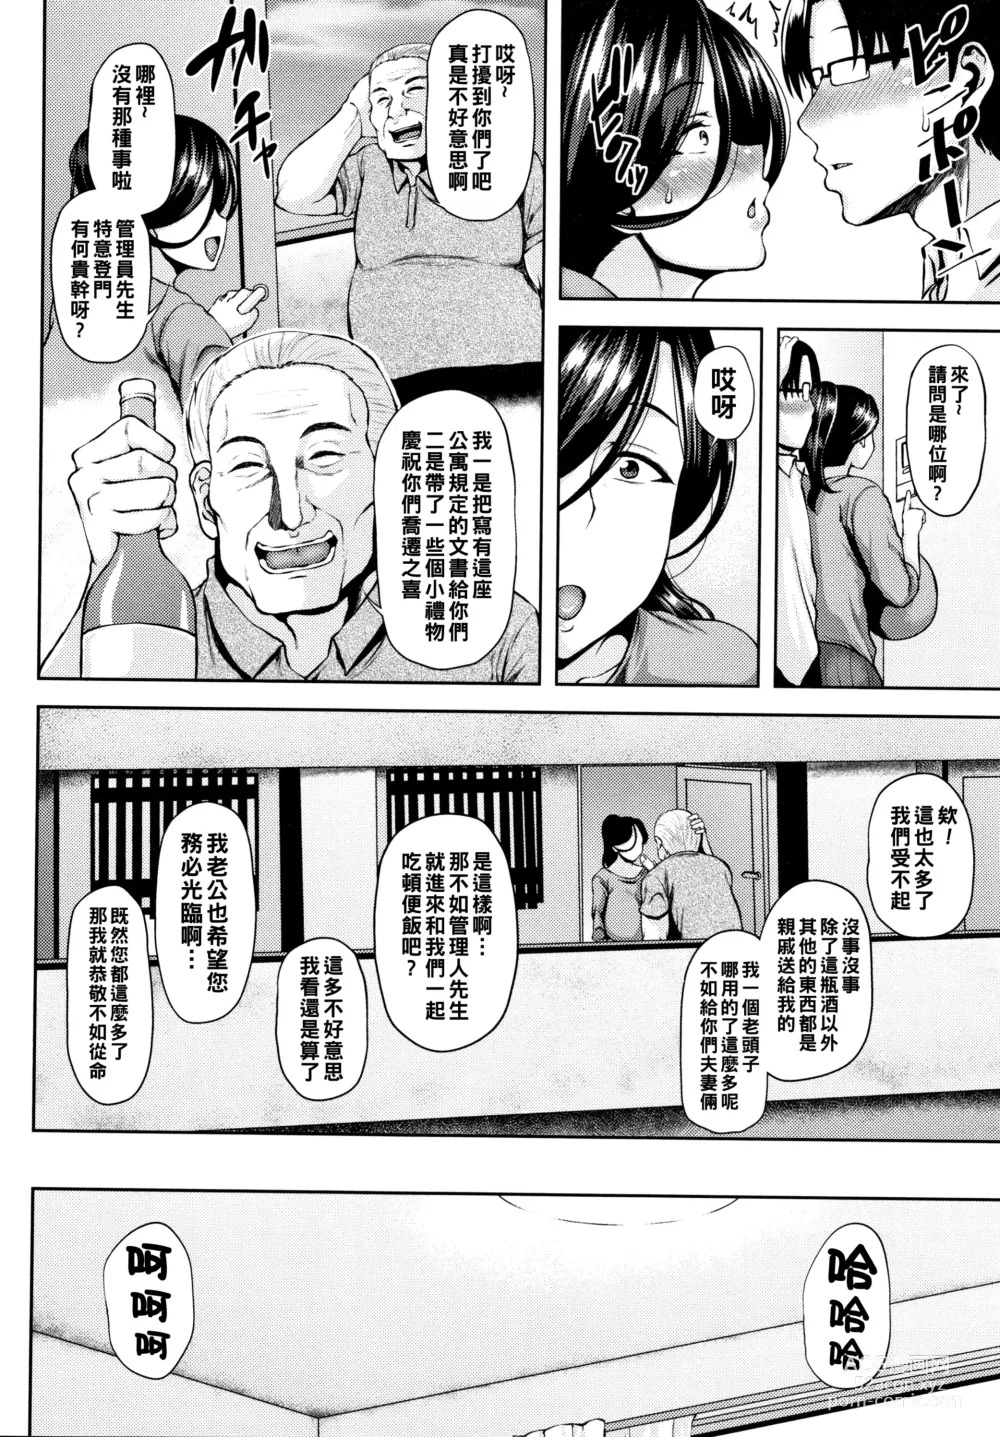 Page 191 of manga Shinen Immoral